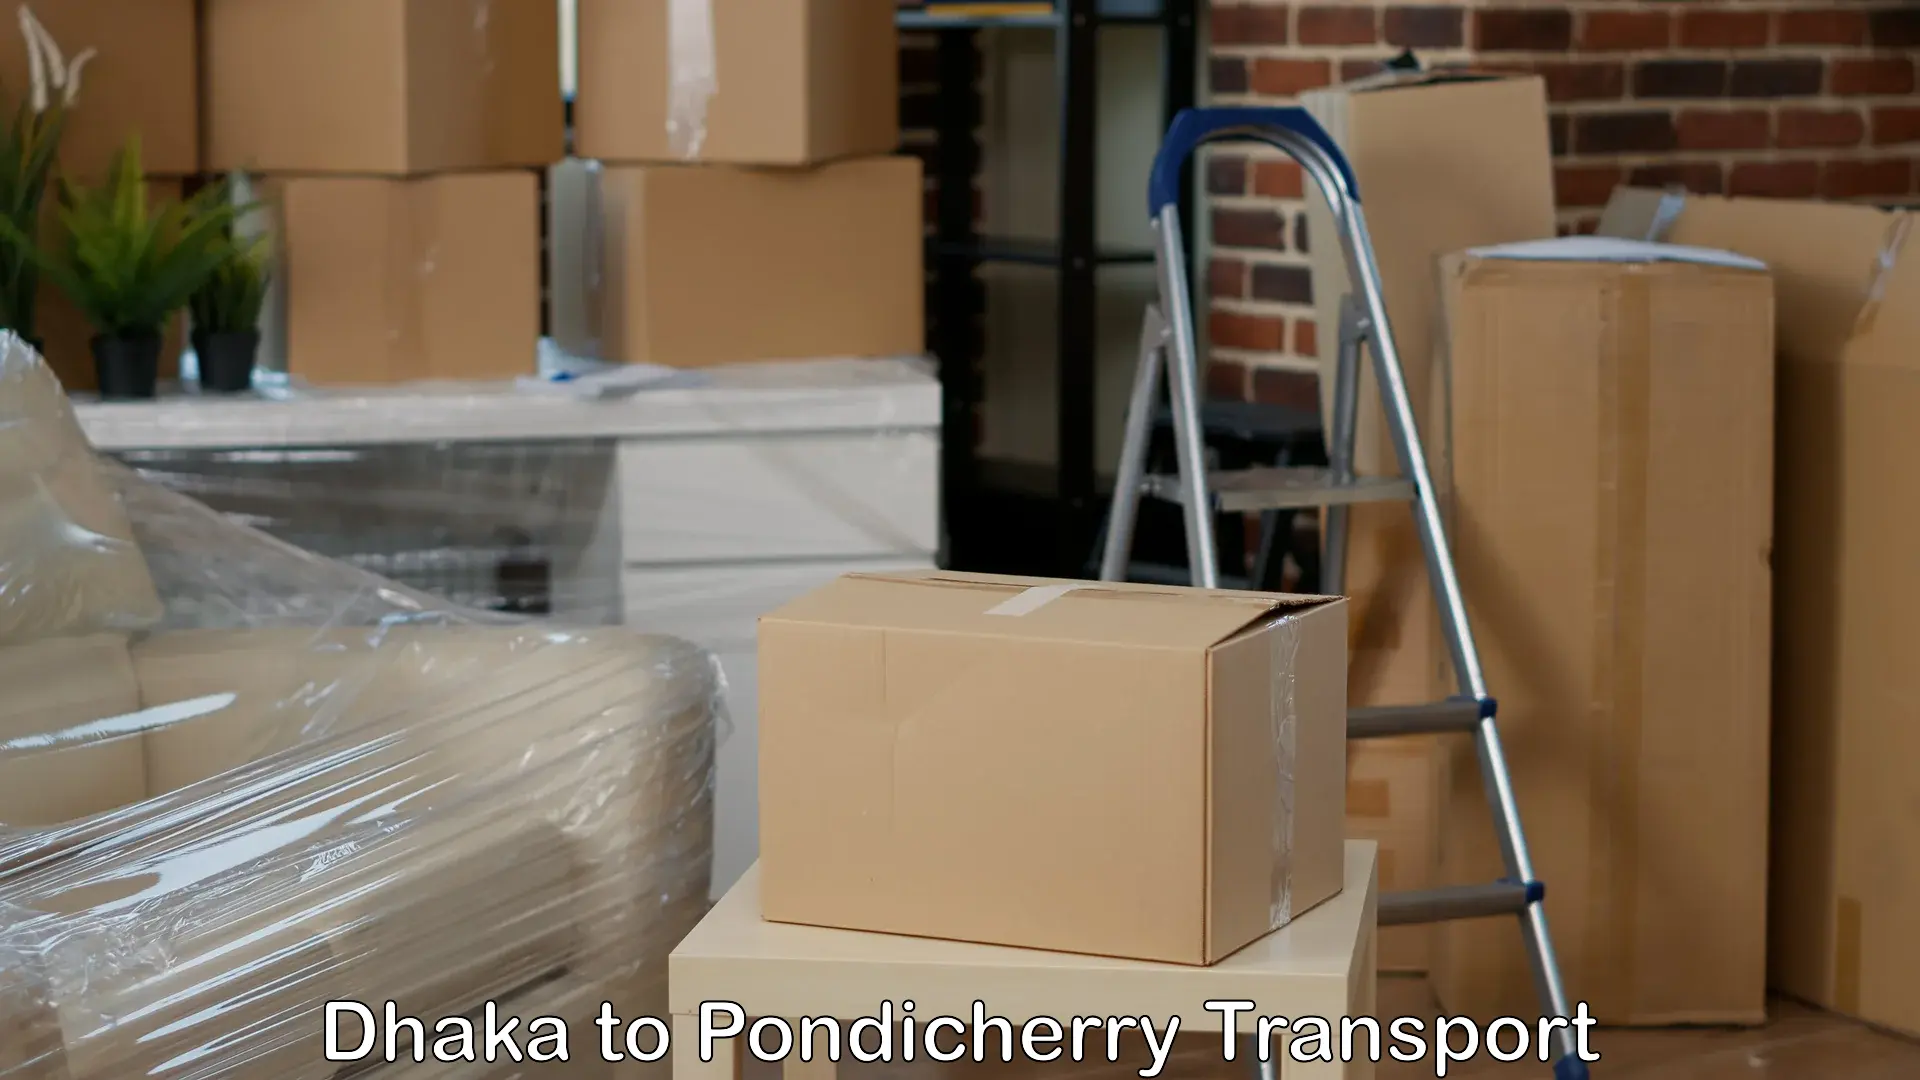 Furniture transport service Dhaka to Pondicherry